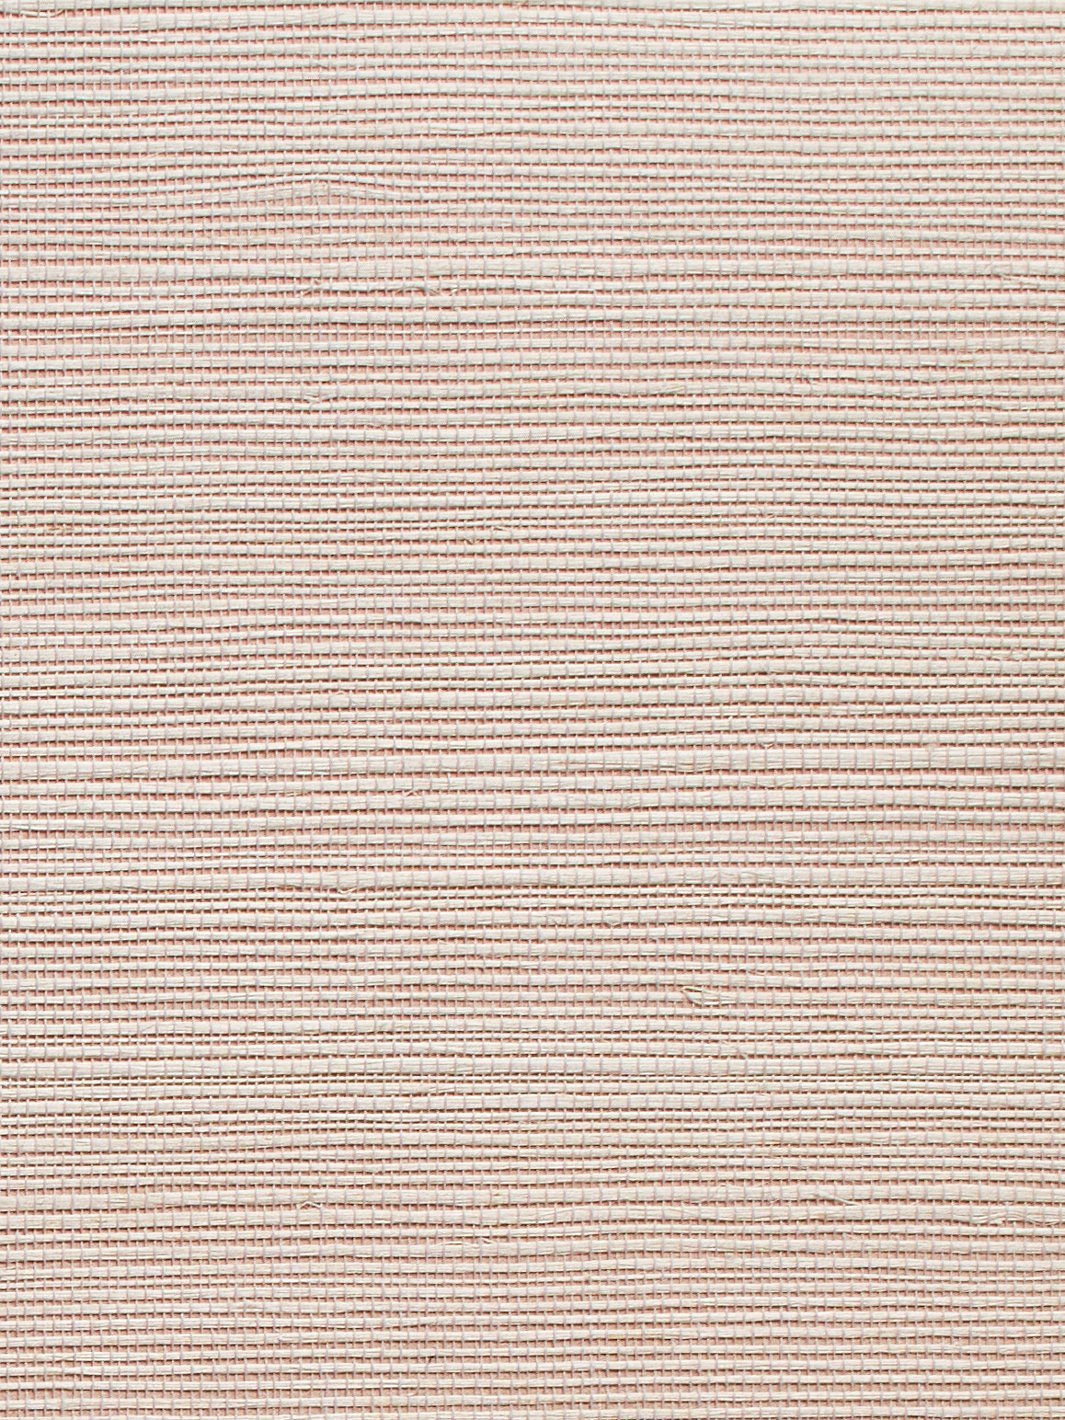 'Solid Grasscloth' Wallpaper by Wallshoppe - Ballet Slipper